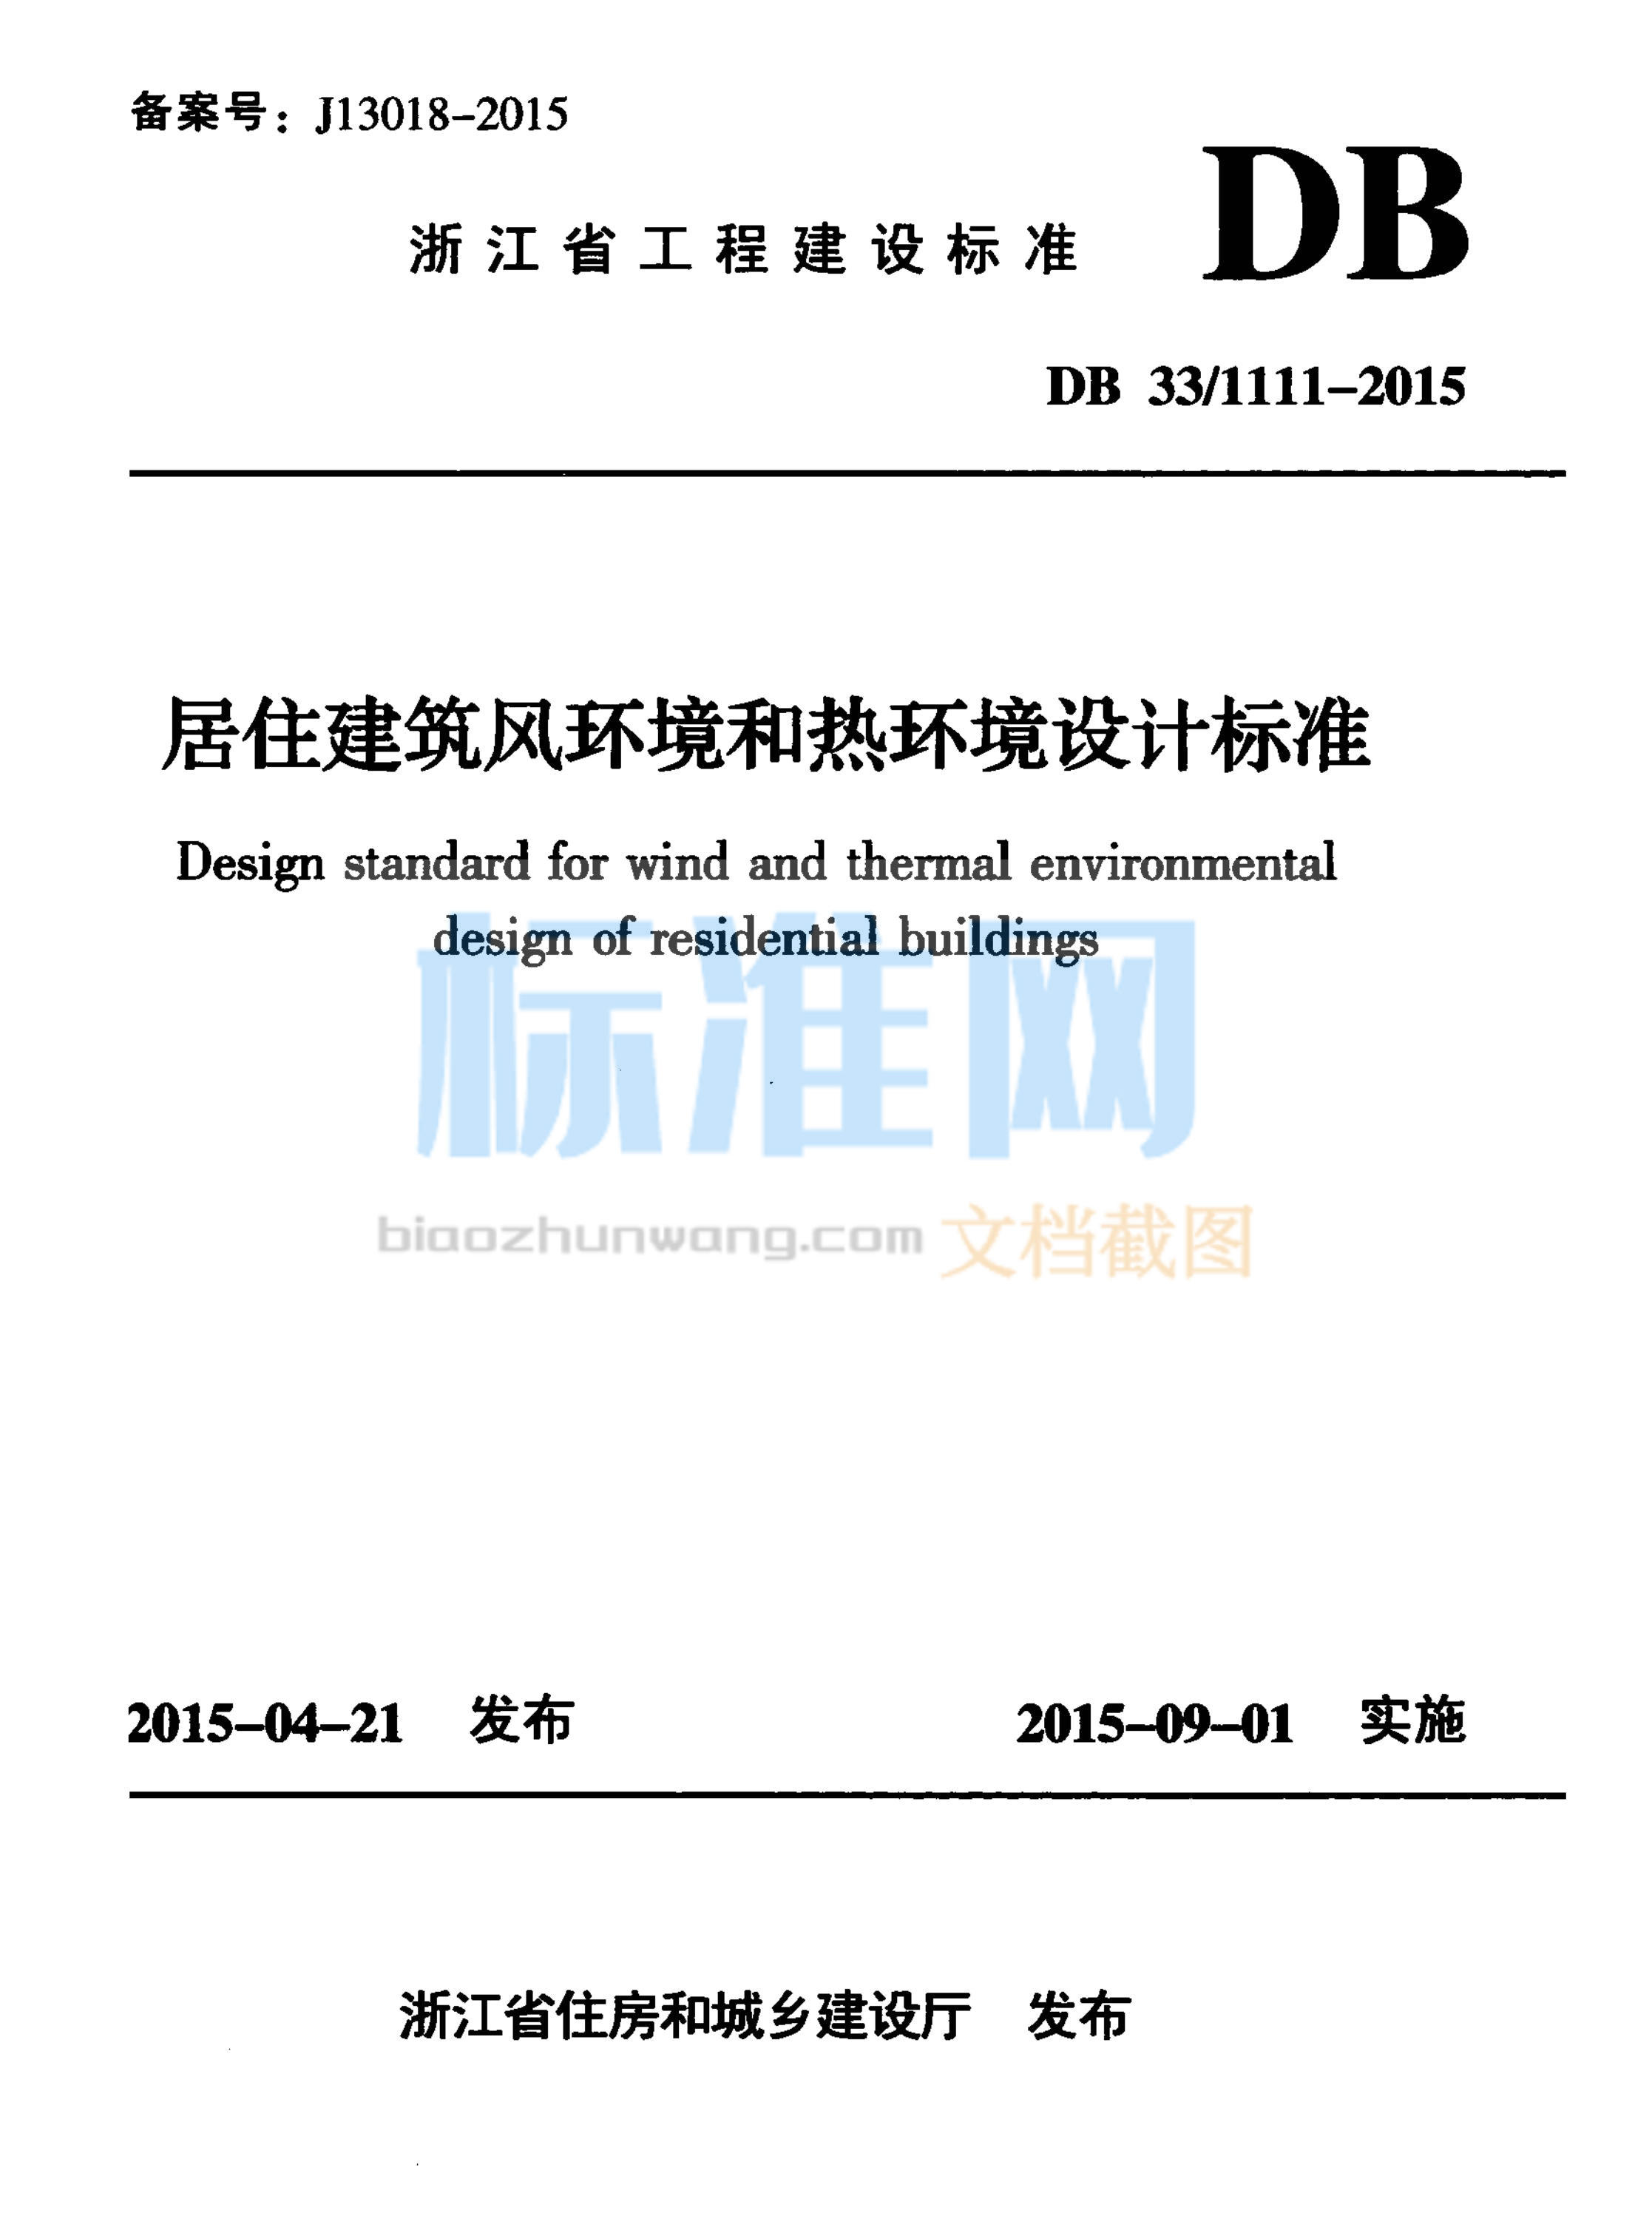 DB33/1111-2015 居住建筑风环境和热环境设计标准